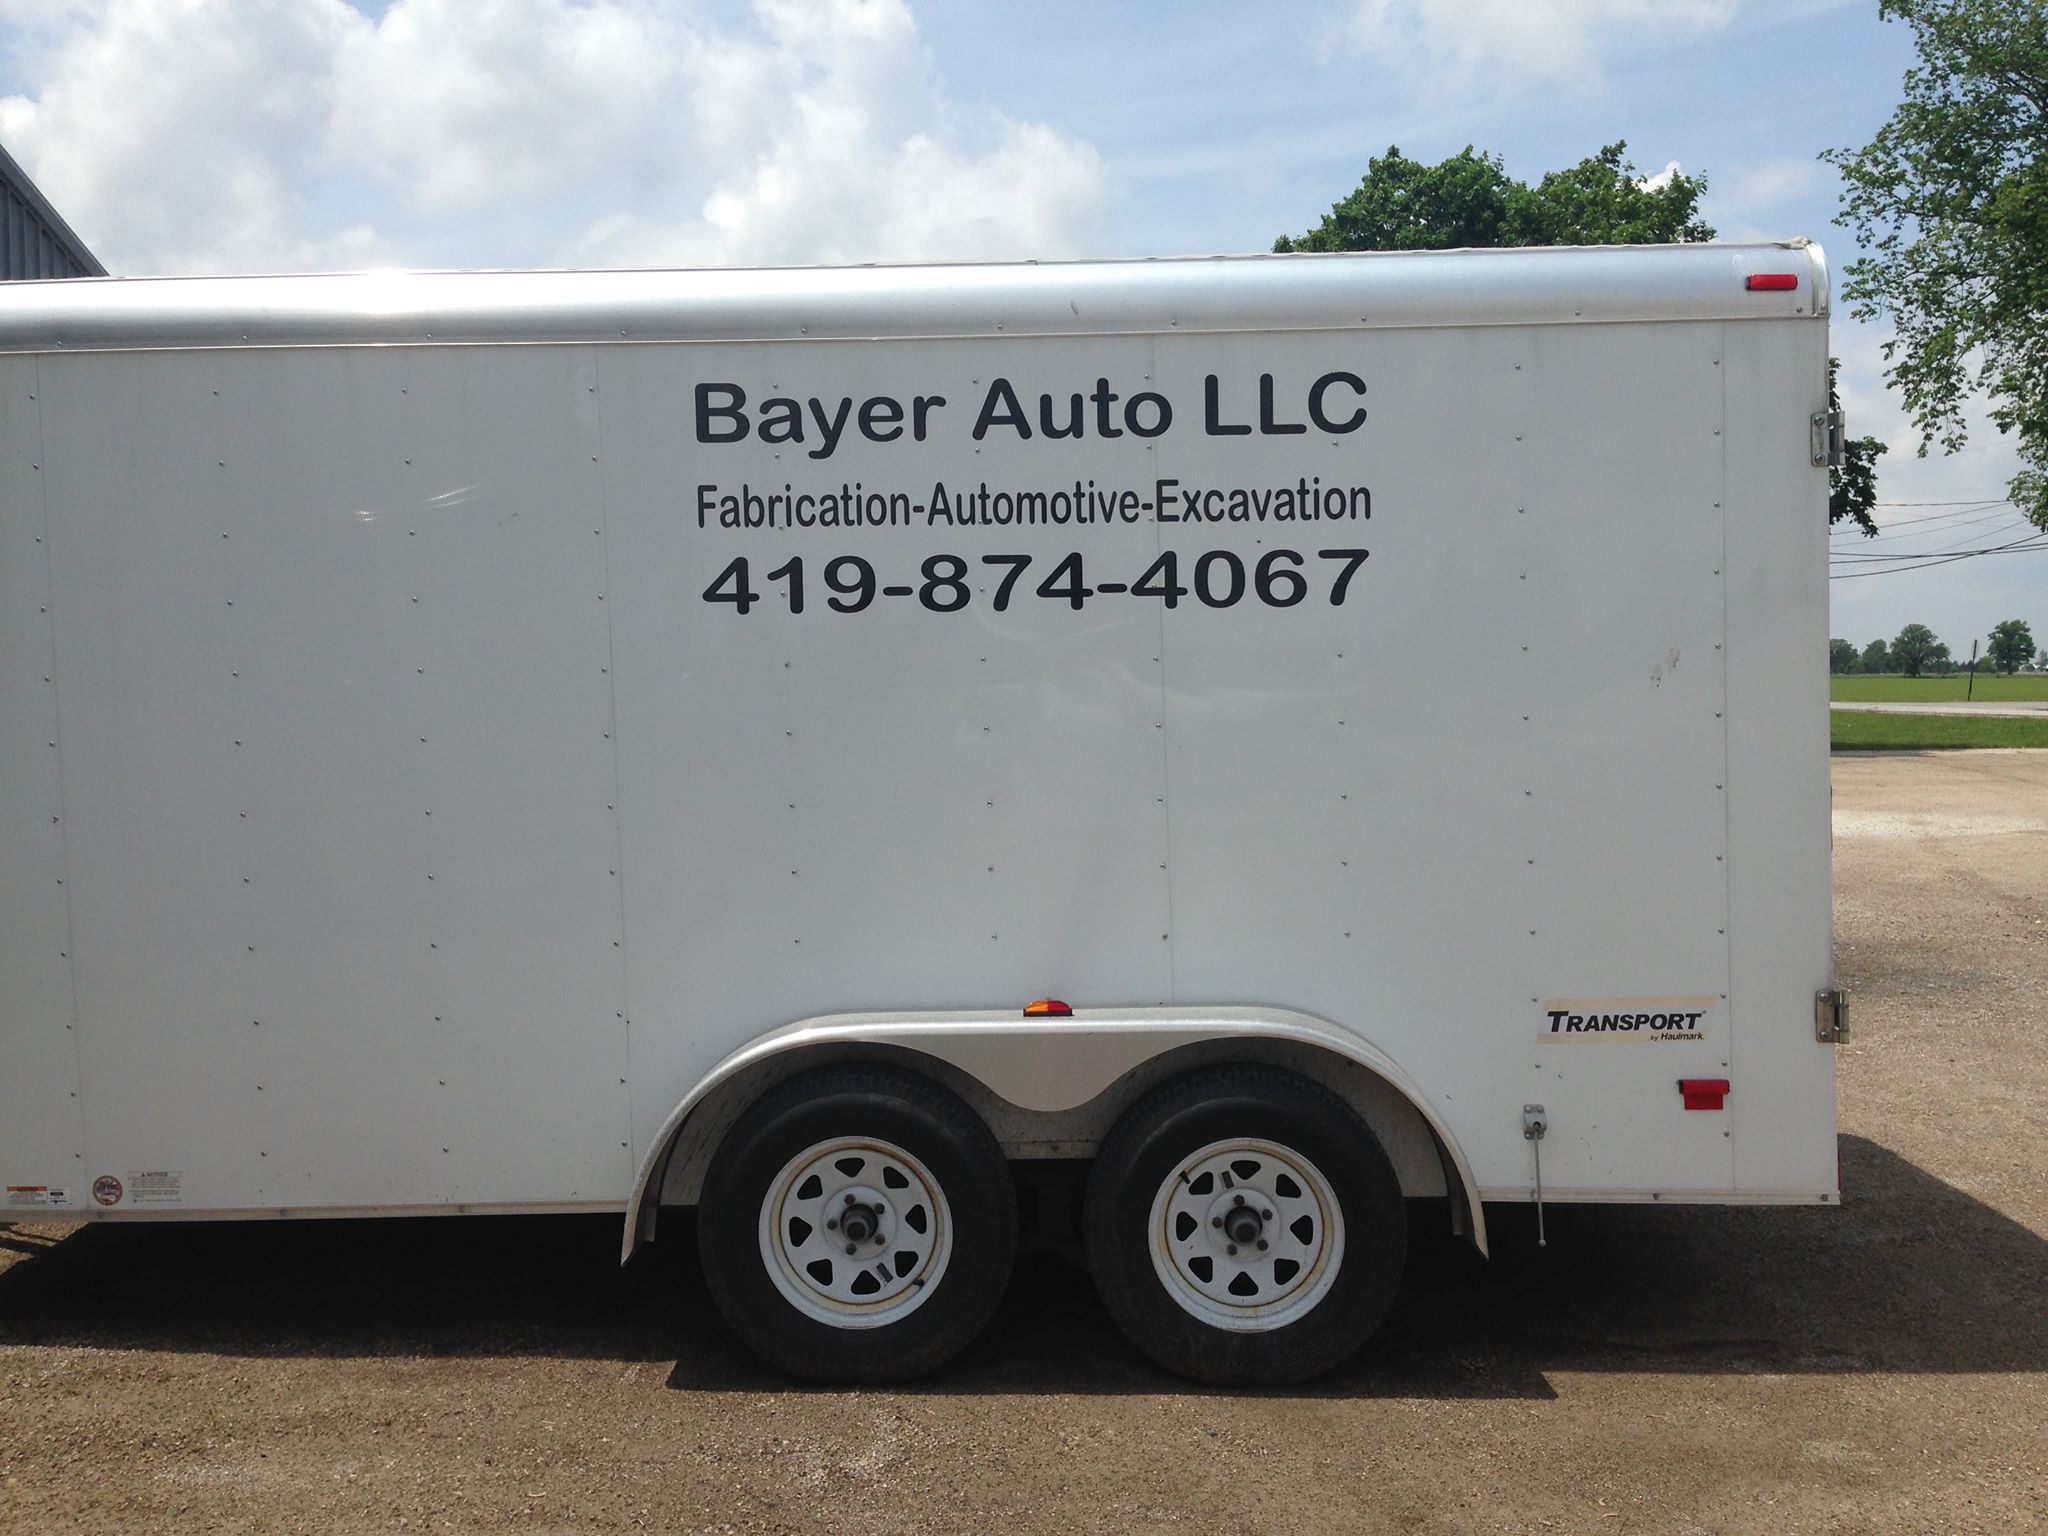 Bayer Auto LLC